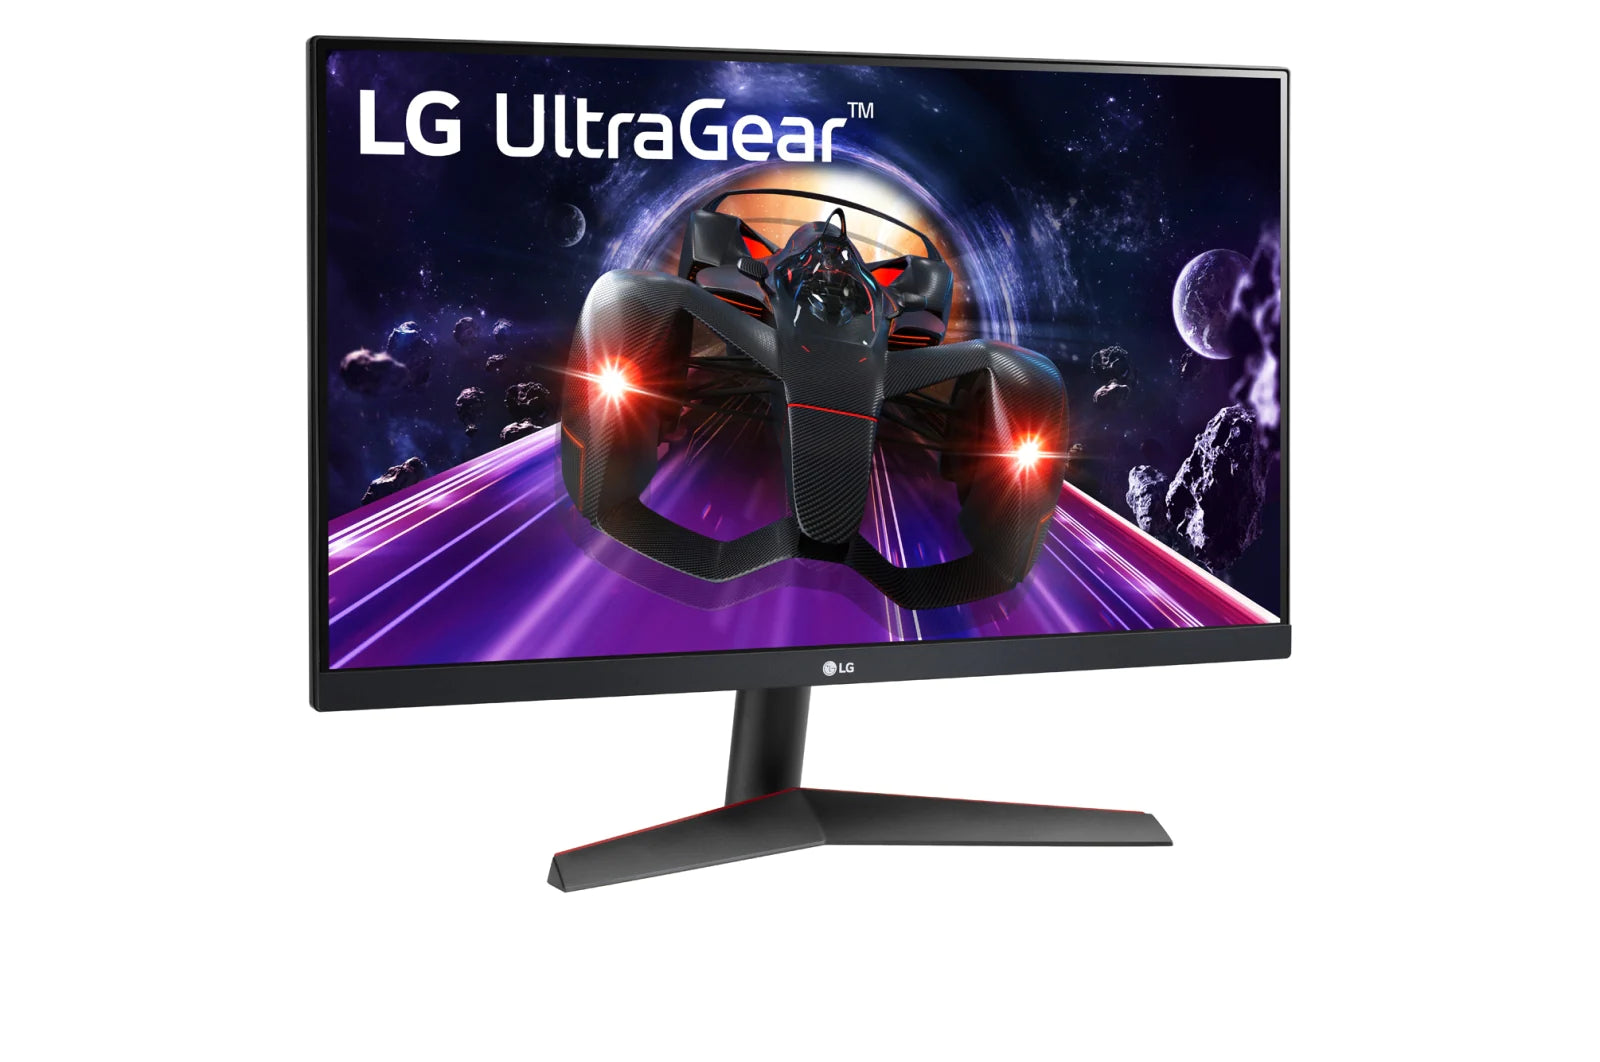 LG Ultra Gear 24GN600-B Full HD Gaming Monitor 144Hz 23.8